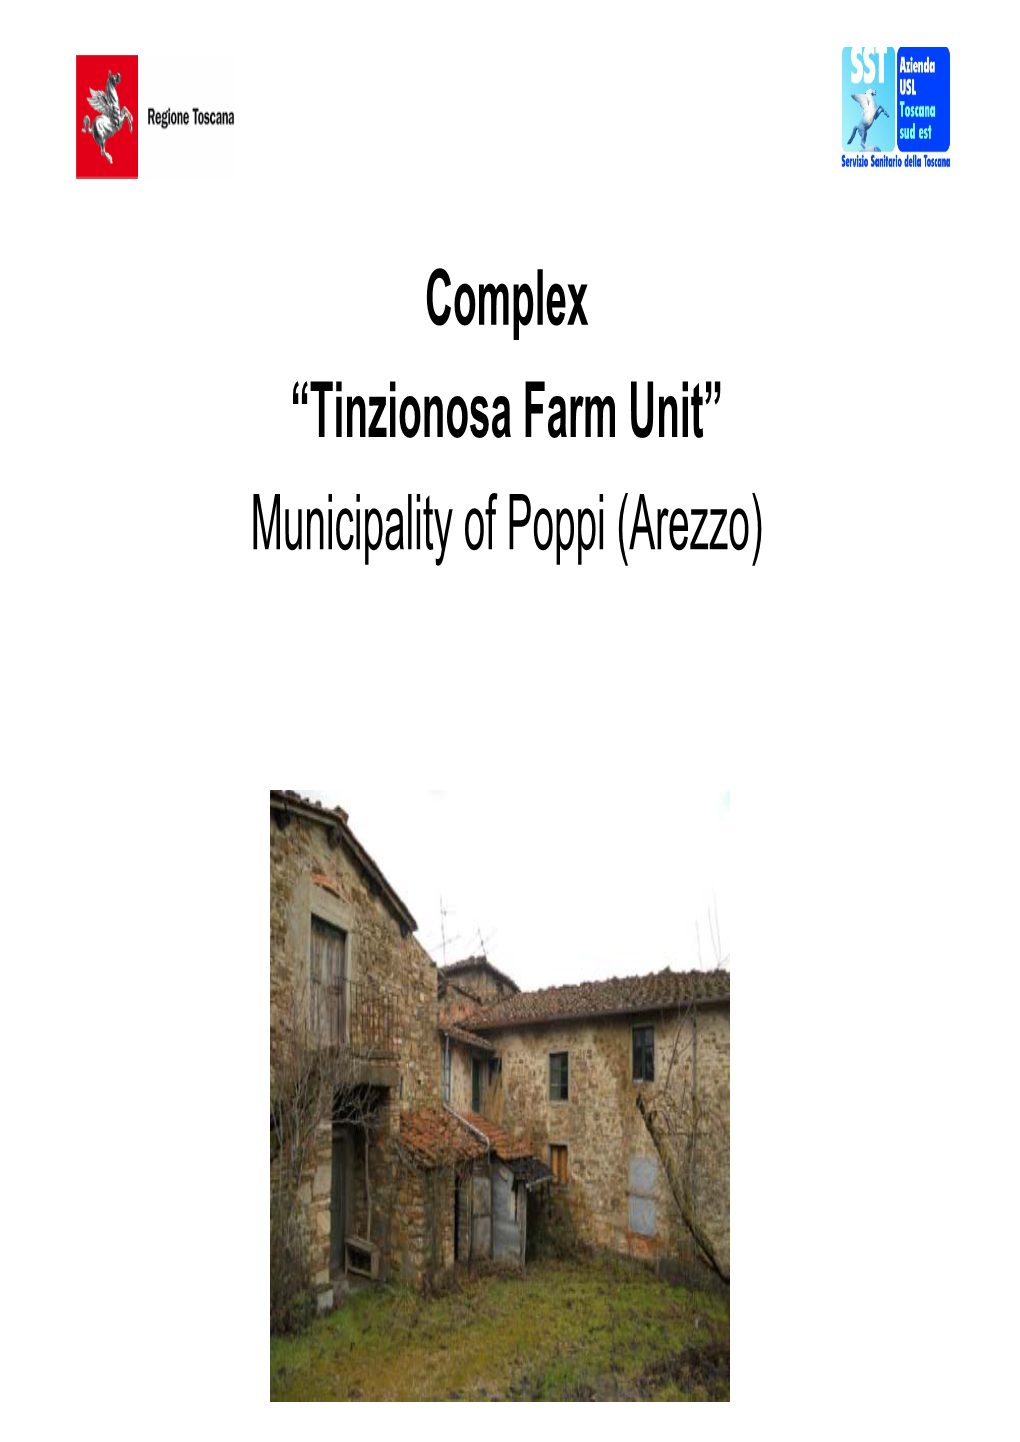 Complex “Tinzionosa Farm Unit” Municipality of Poppi (Arezzo) Map of Tuscany with Location of Poppi (Arezzo)